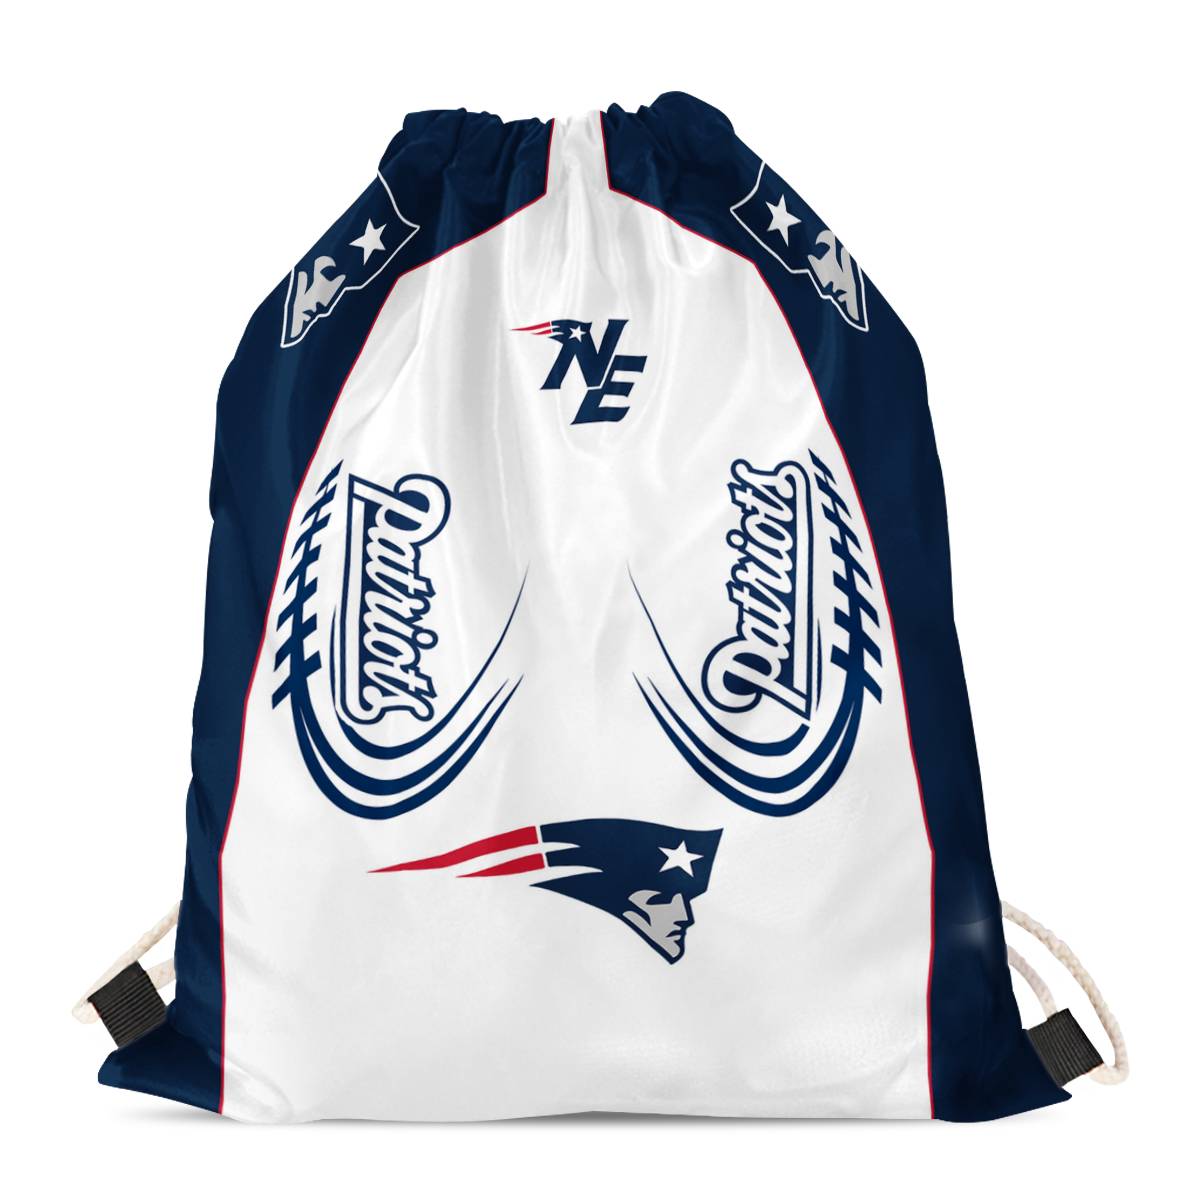 New England Patriots Drawstring Backpack sack / Gym bag 18" x 14" 001